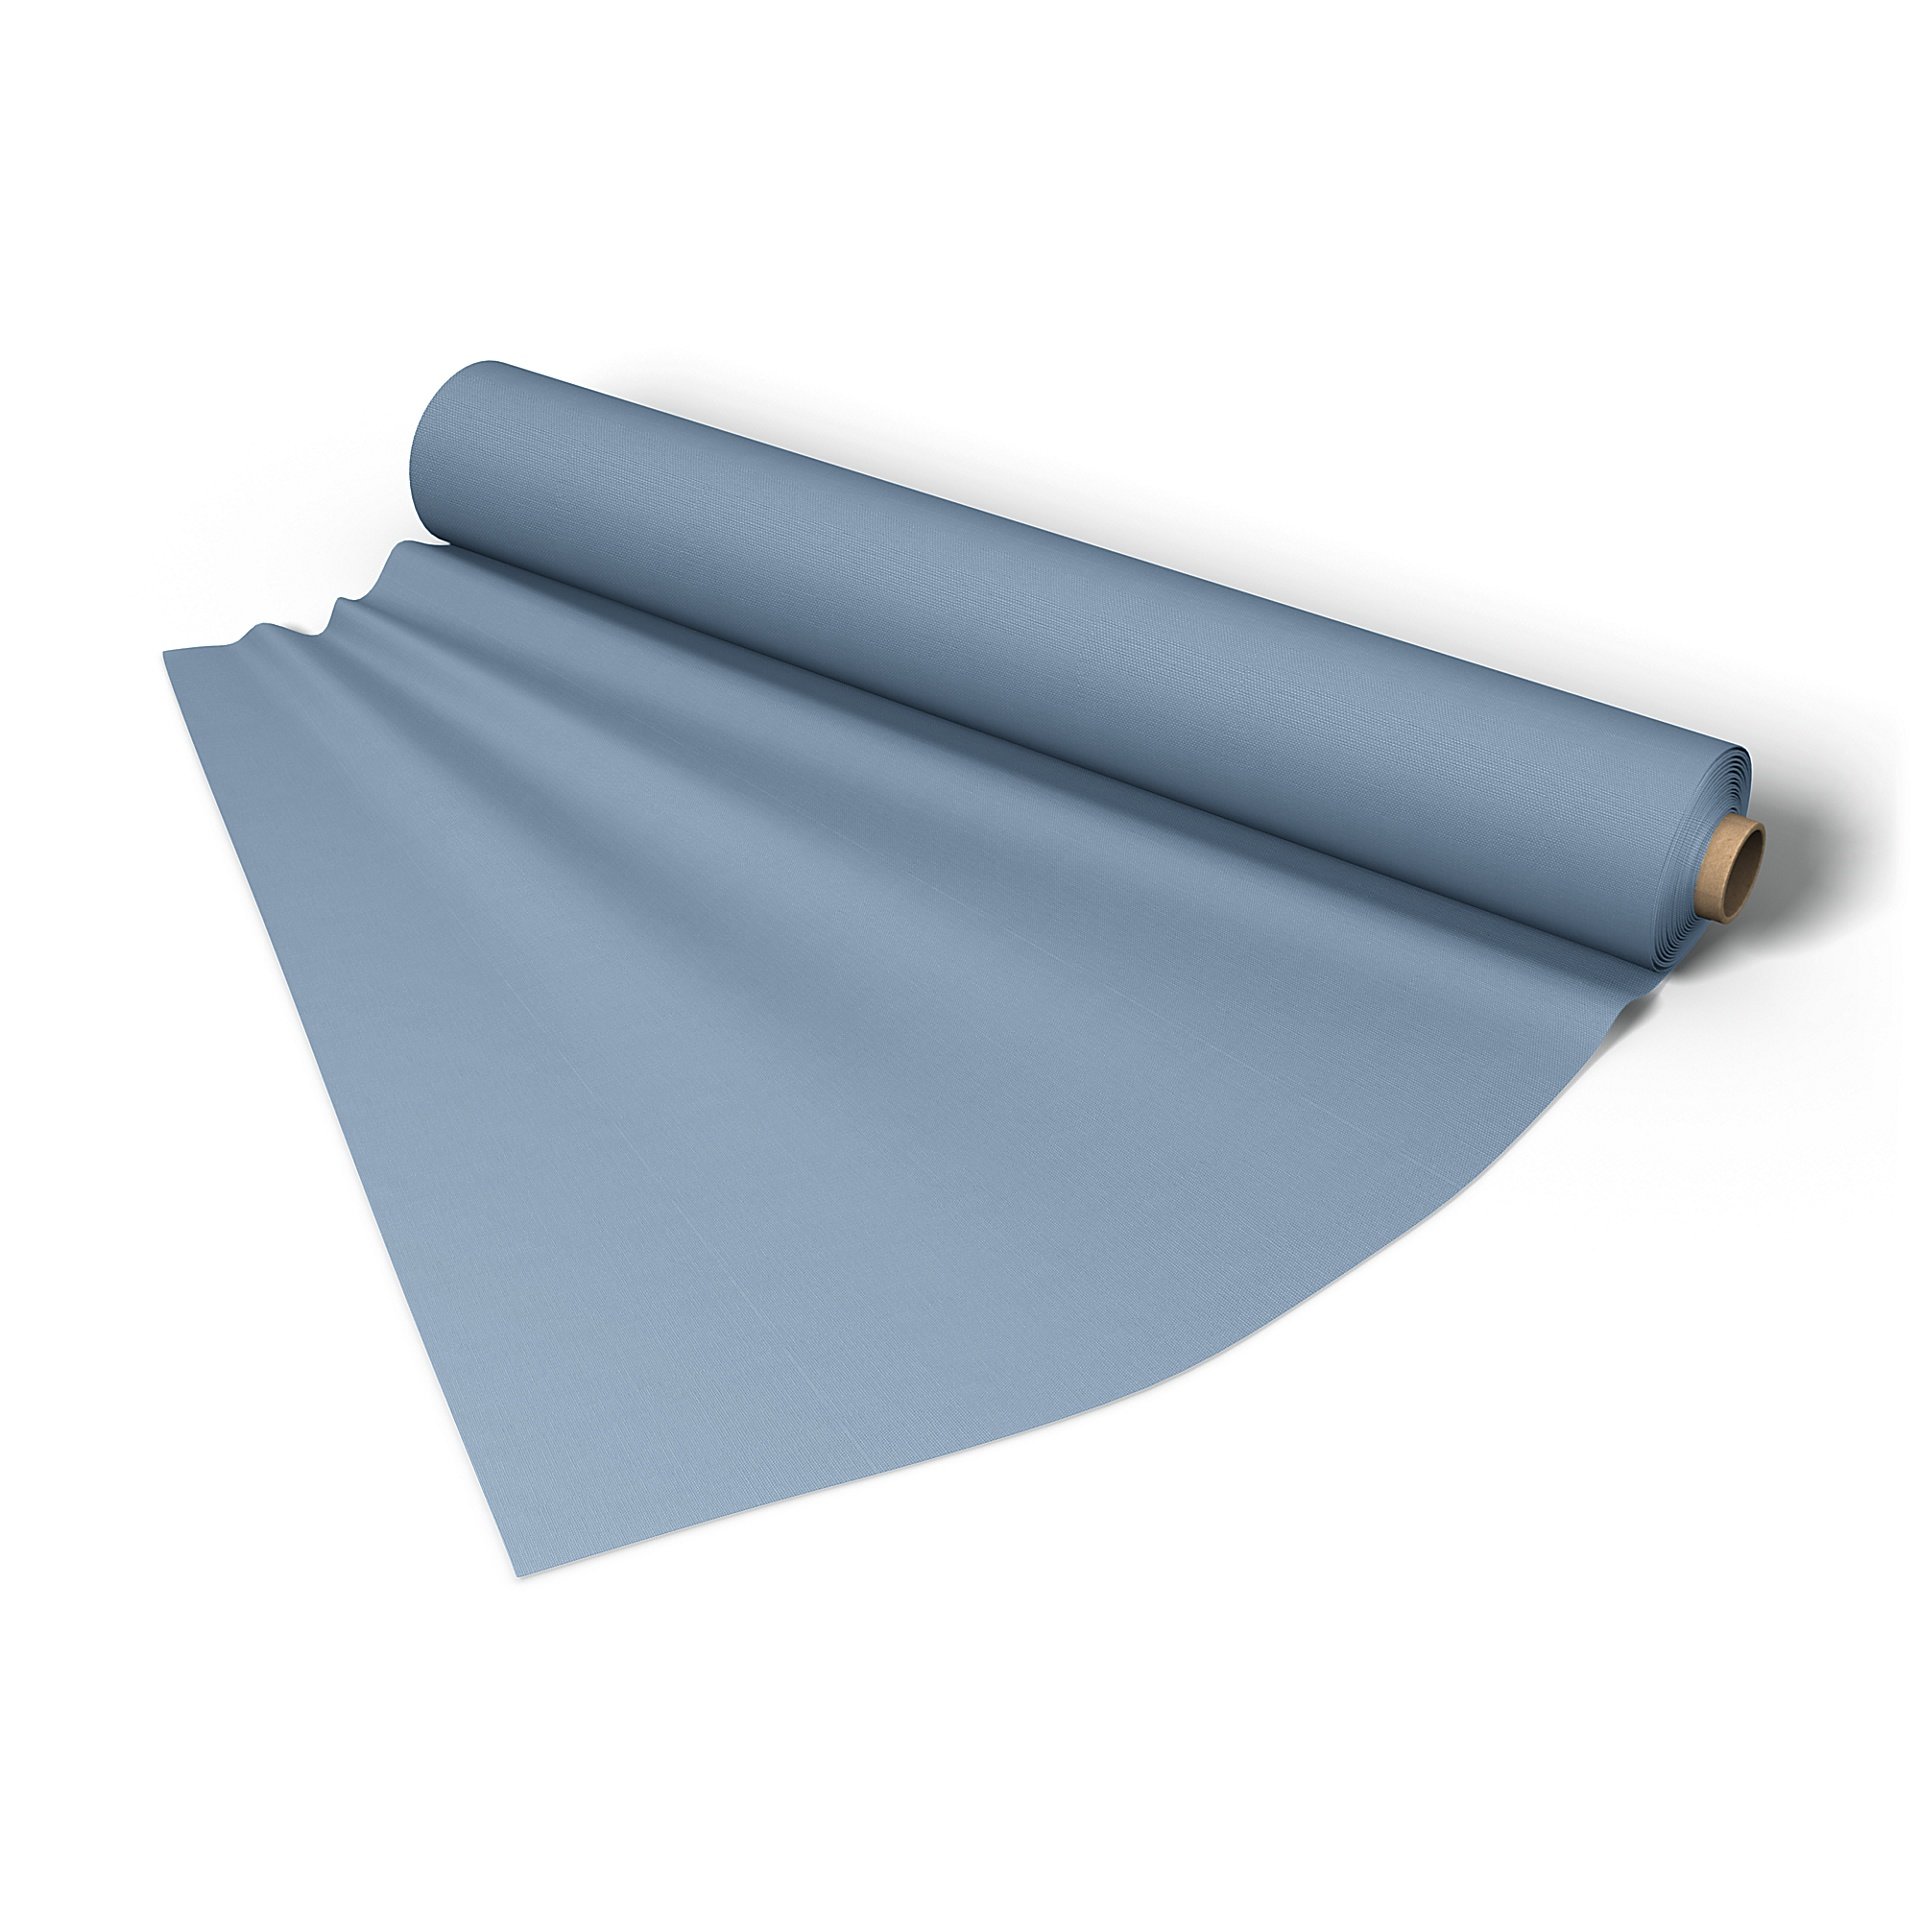 Fabric per metre, Dusty Blue, Cotton - Bemz